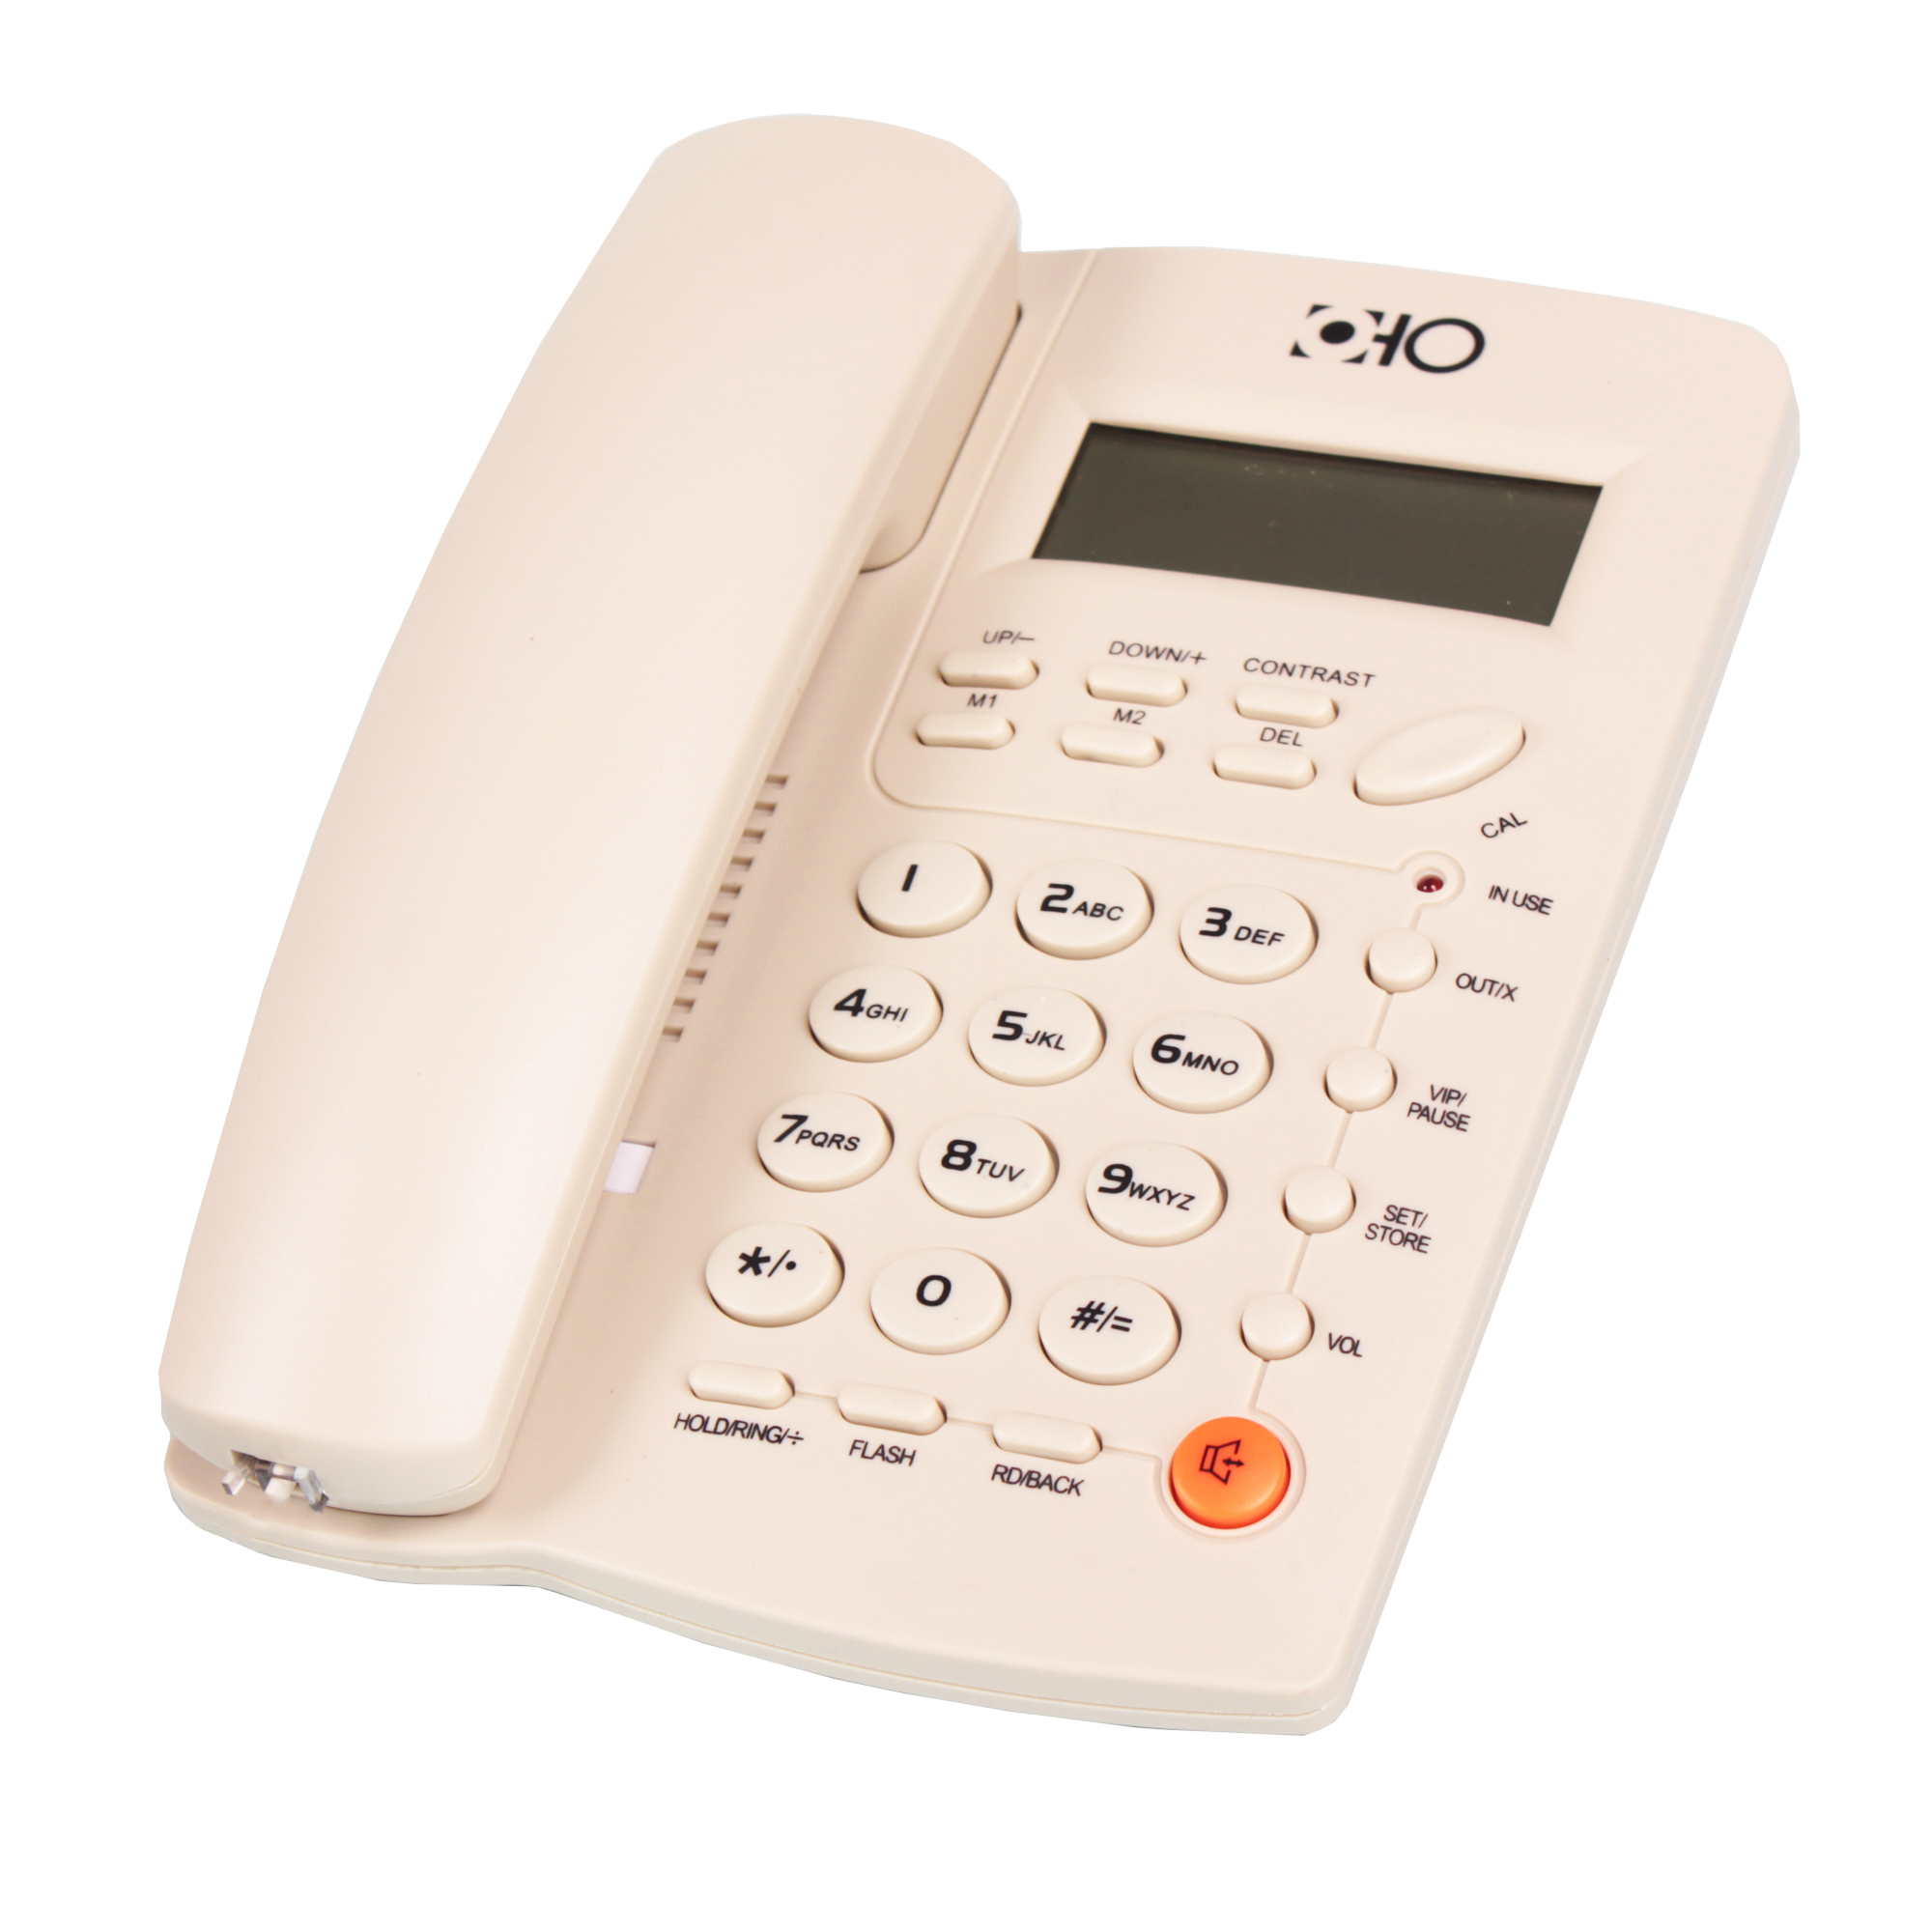 تلفن اوهو مدل OHO-03